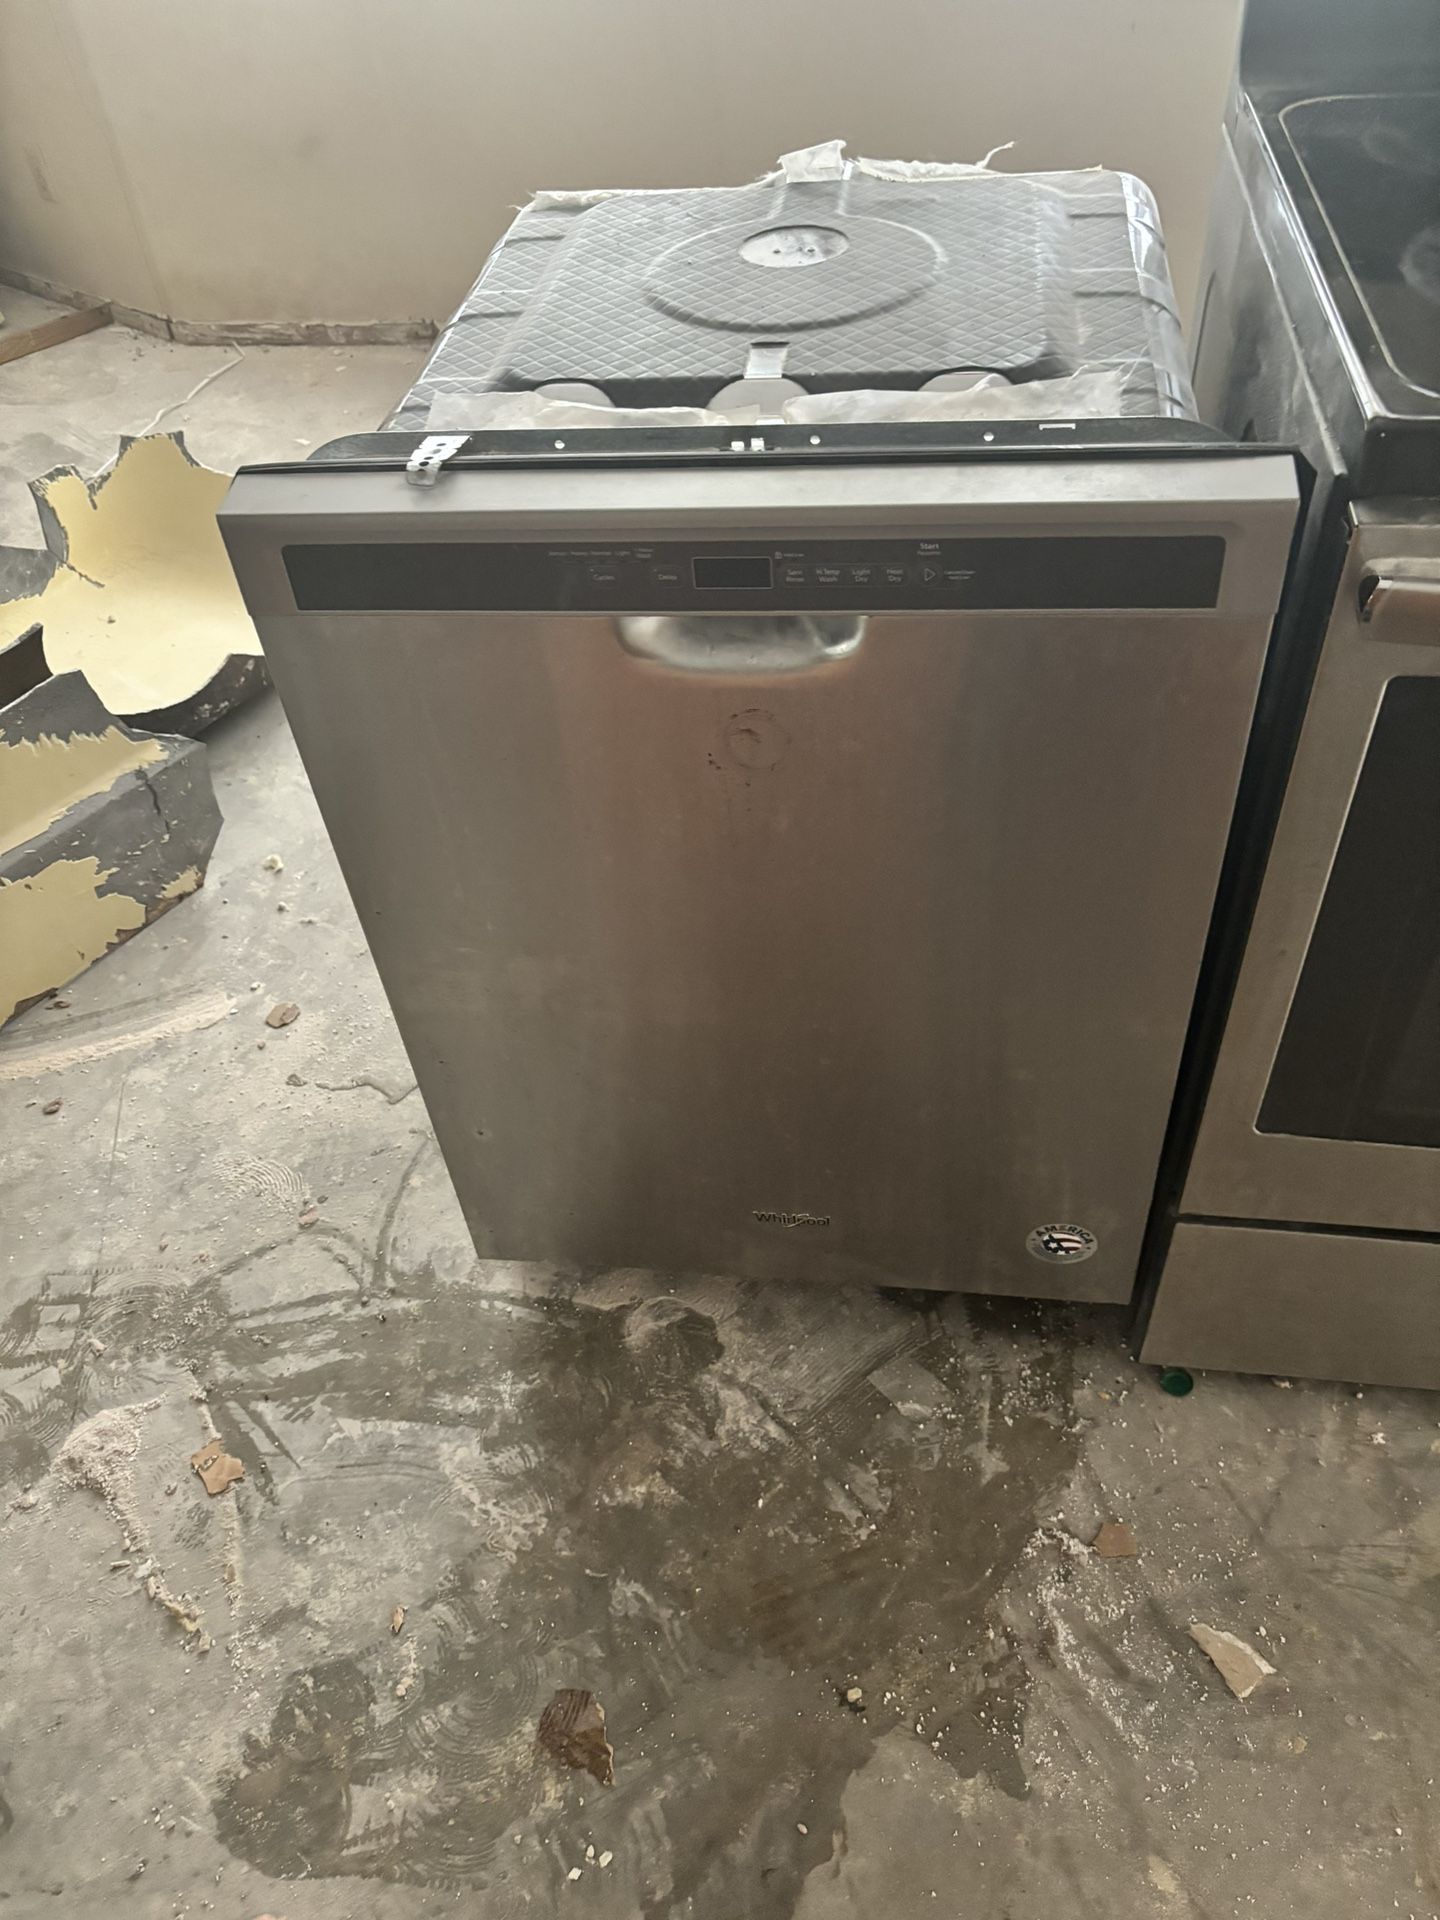 Stainless Steel Dishwasher